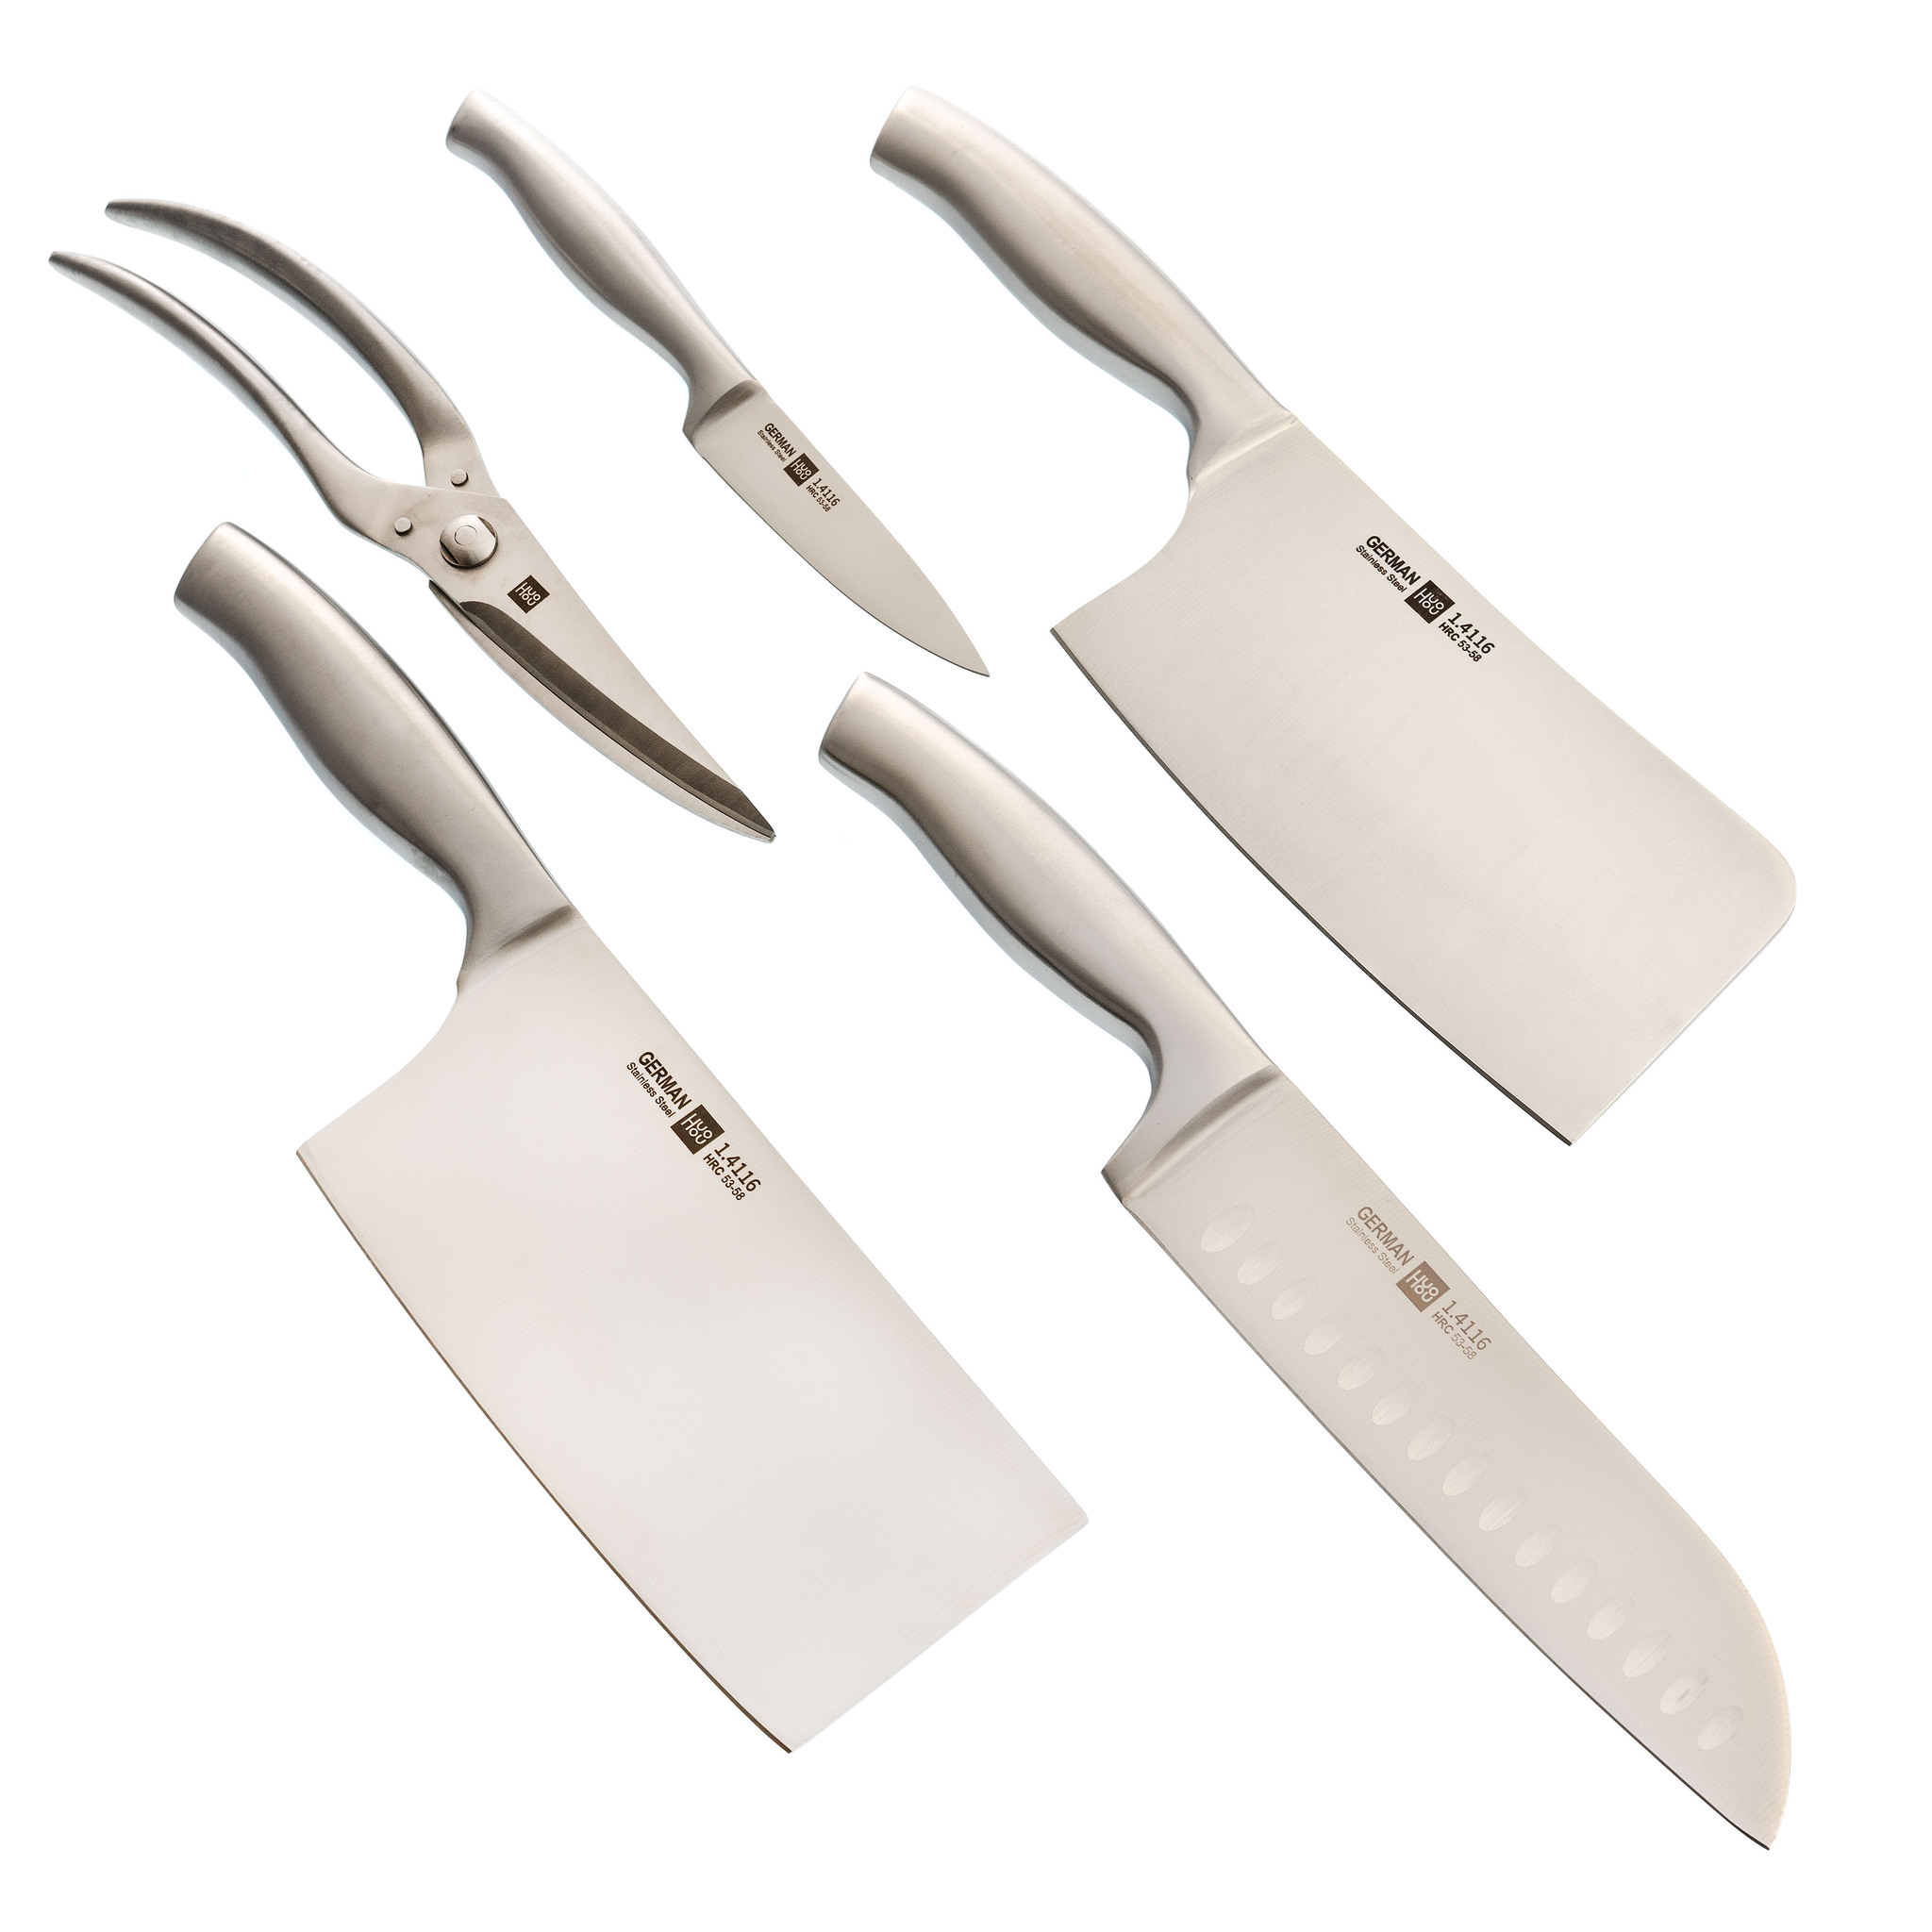      HuoHou 6-Piece Stainless Steel Kitchen Knife Set